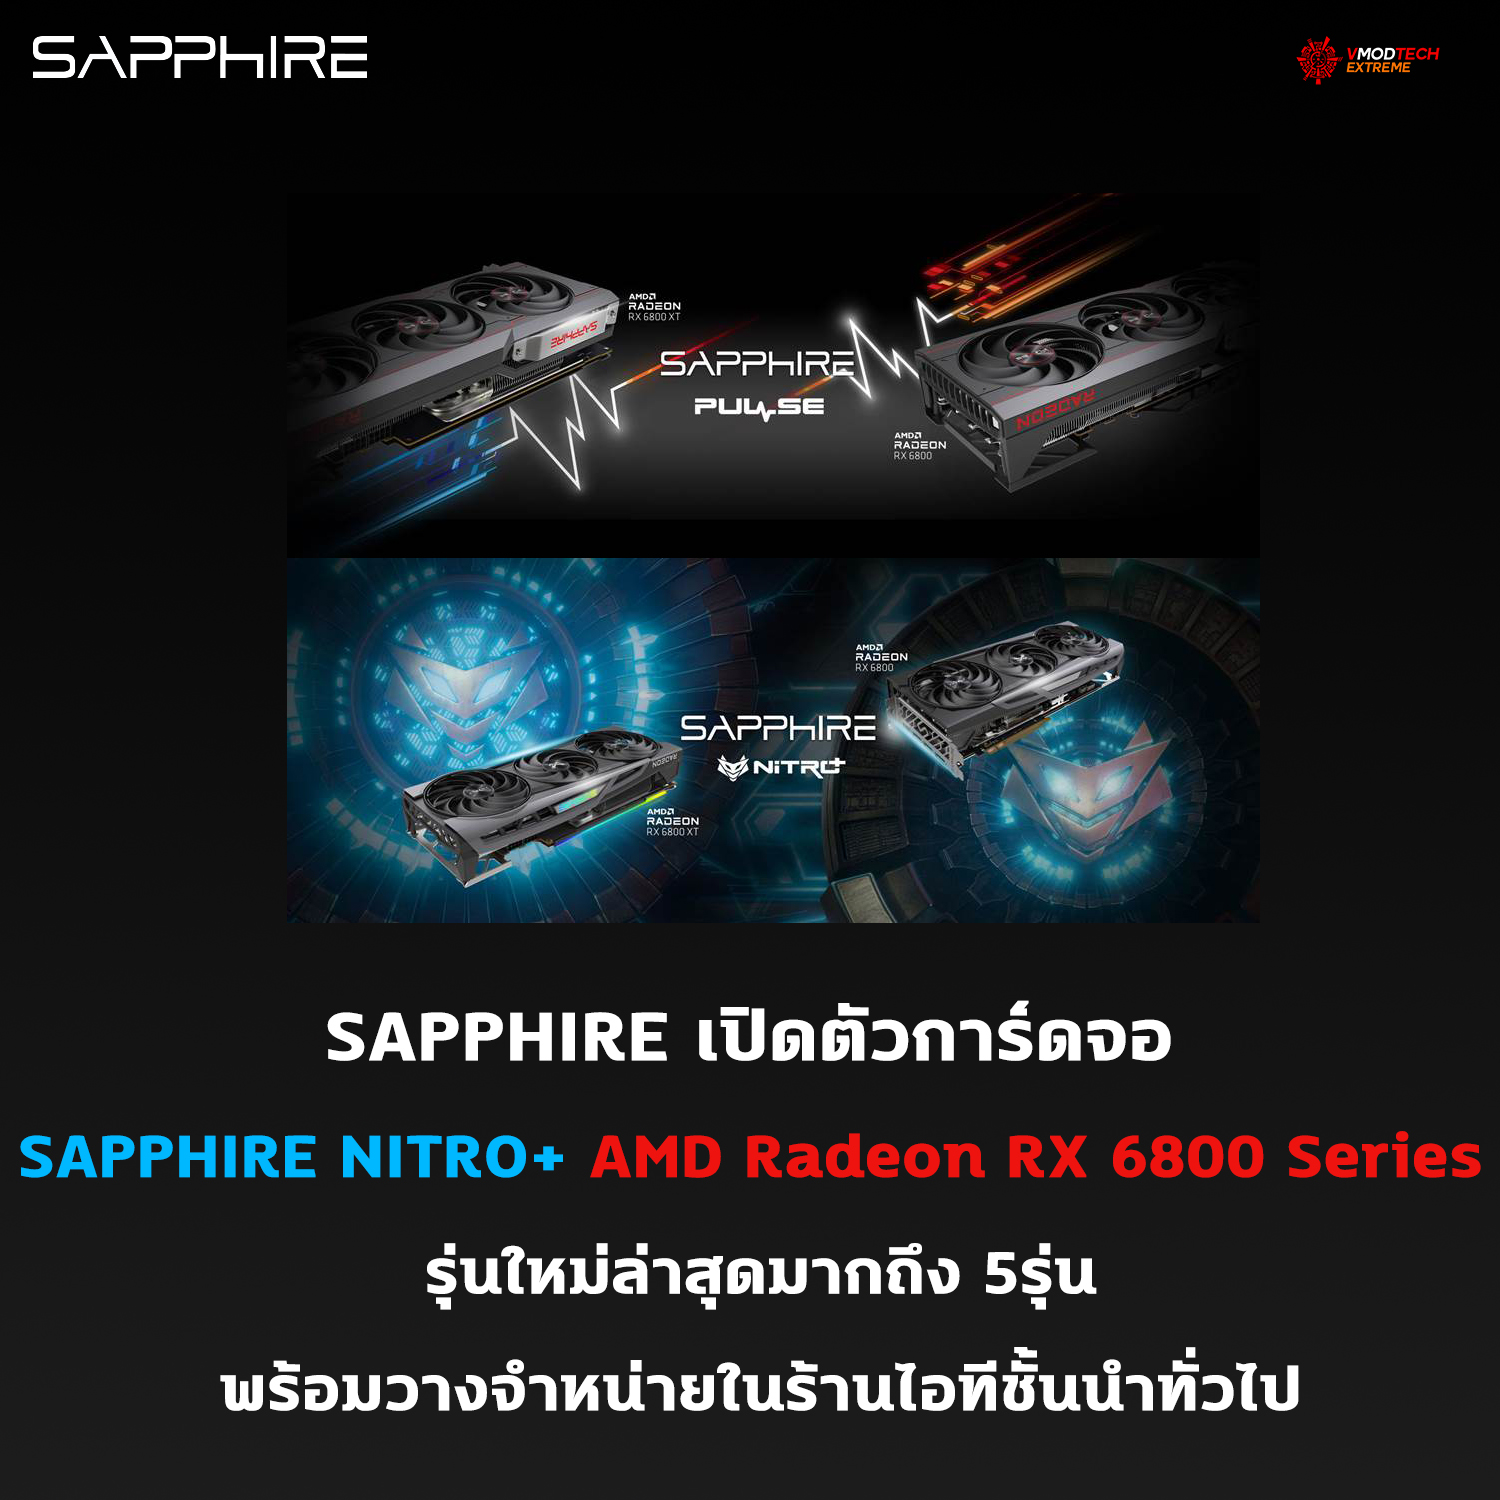 sapphire nitro amd radeon rx 6800 series SAPPHIRE เปิดตัวการ์ดจอ SAPPHIRE NITRO+ AMD Radeon RX 6800 Series รุ่นใหม่ล่าสุดมากถึง 5รุ่น